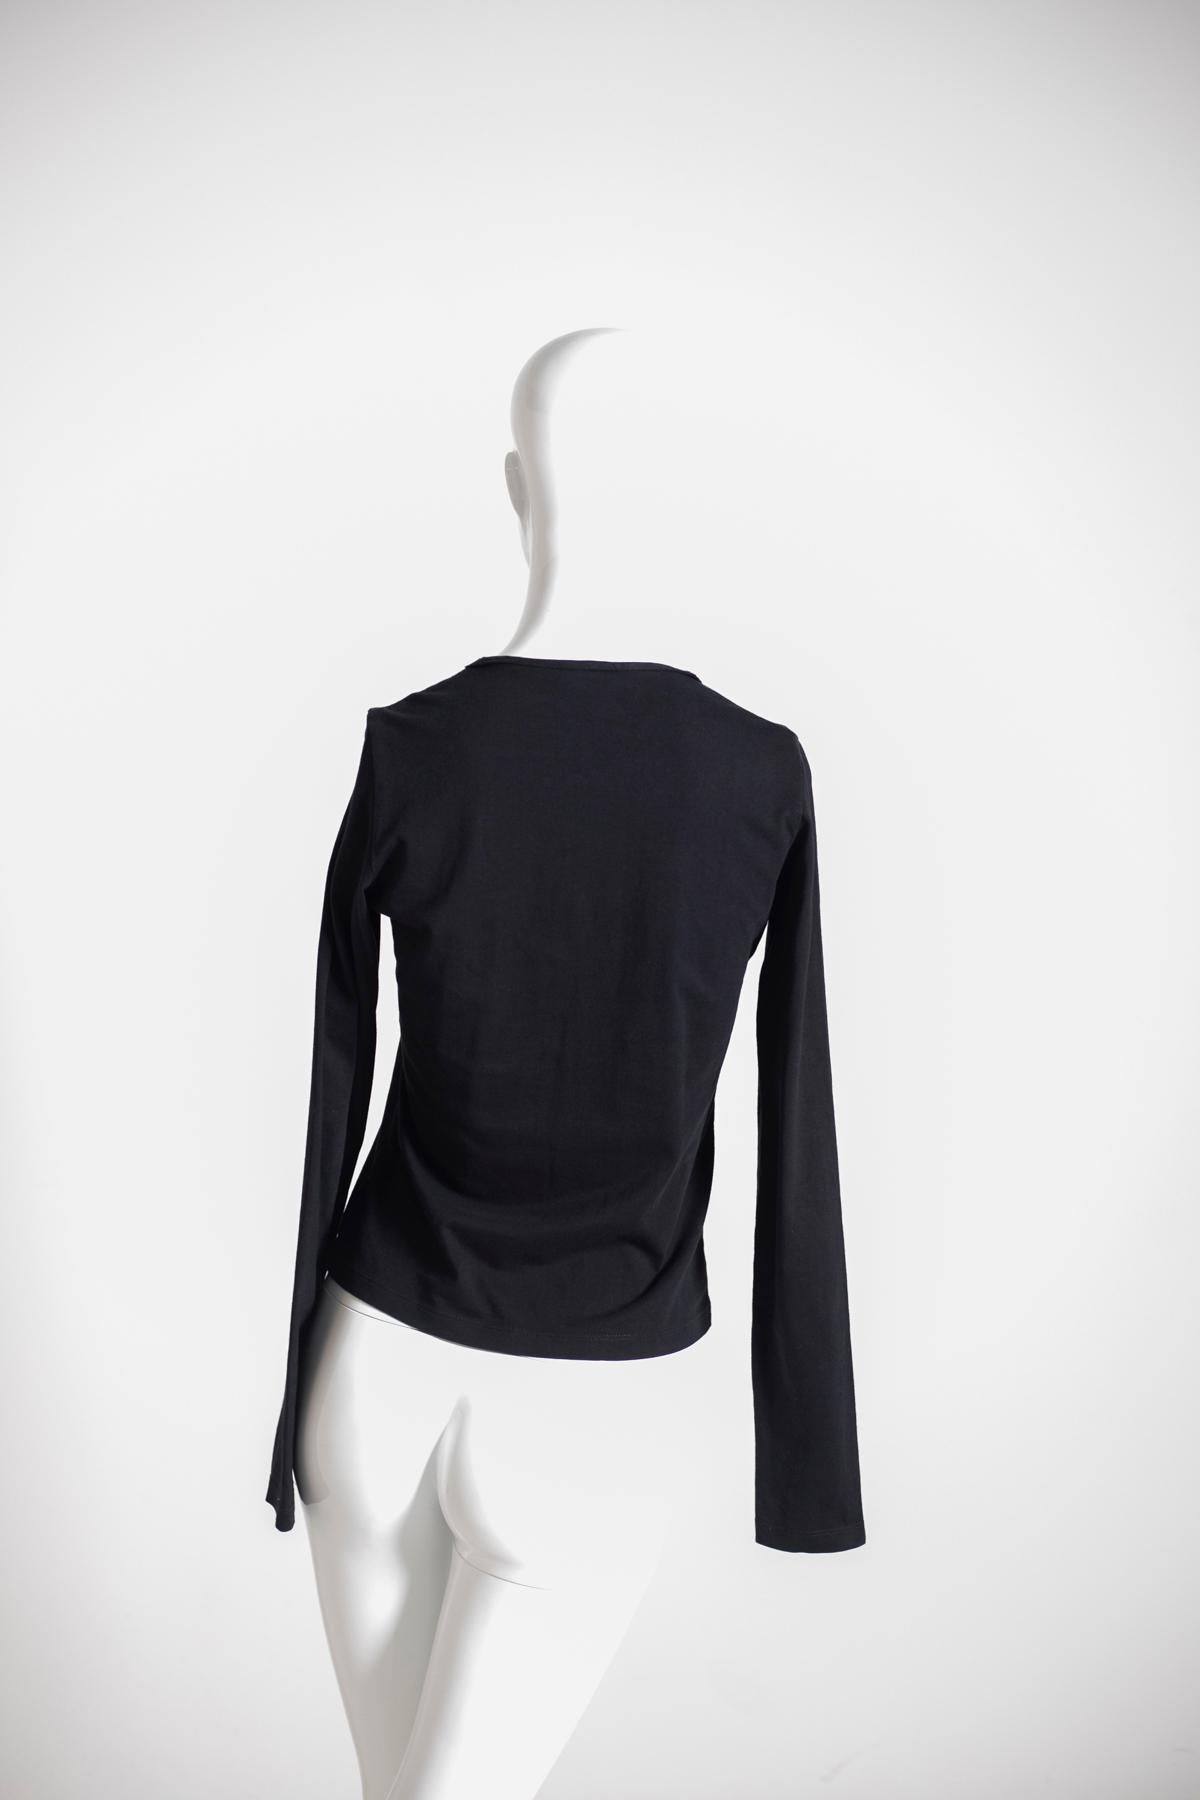 Roberto Cavalli Cotton Long Sleeve Shirt For Sale 3